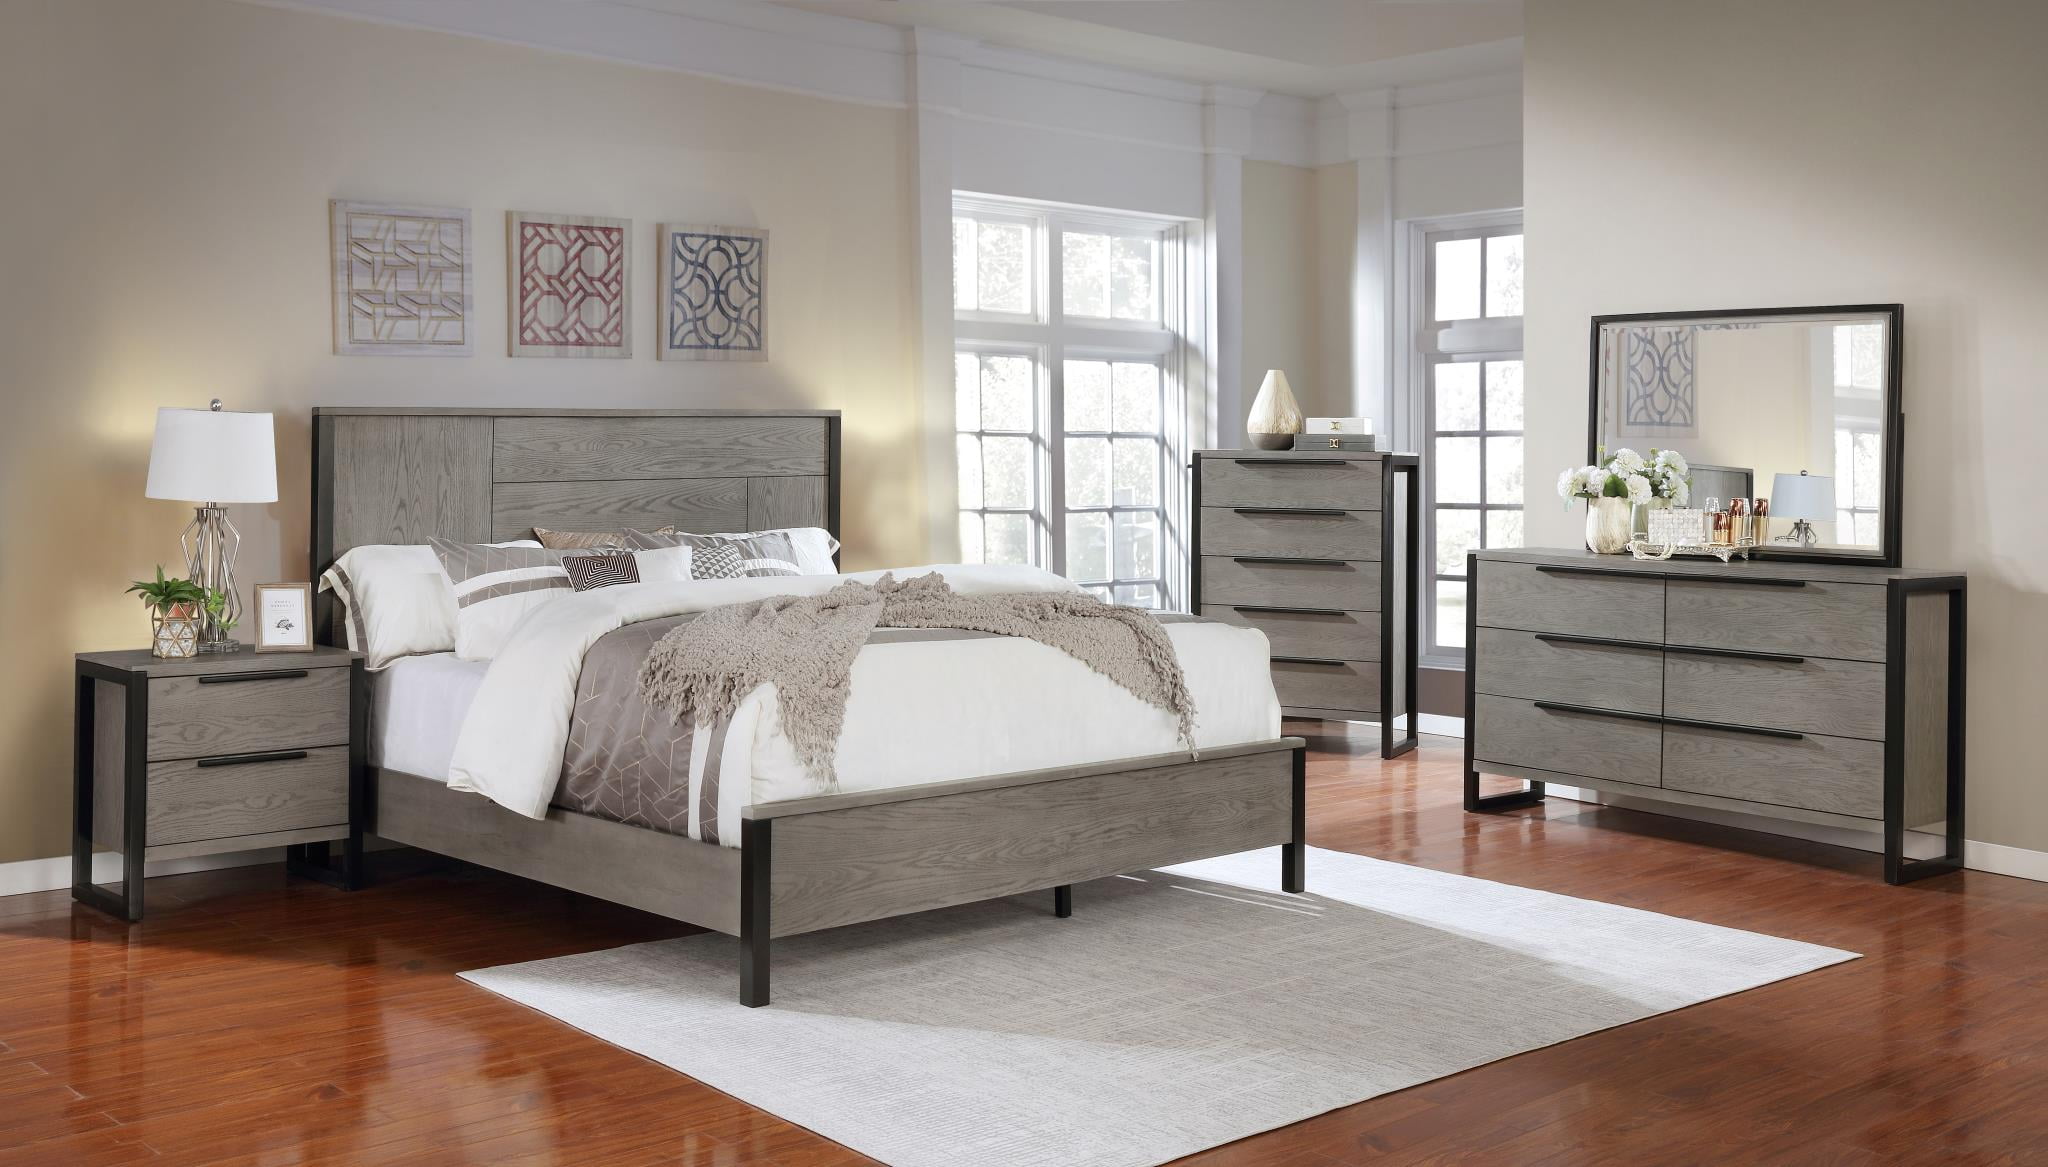 Stylish Modern Furniture Bedroom Set Queen Size Bed Dresser Mirror Nightstand Set 4Pc Gray Wood